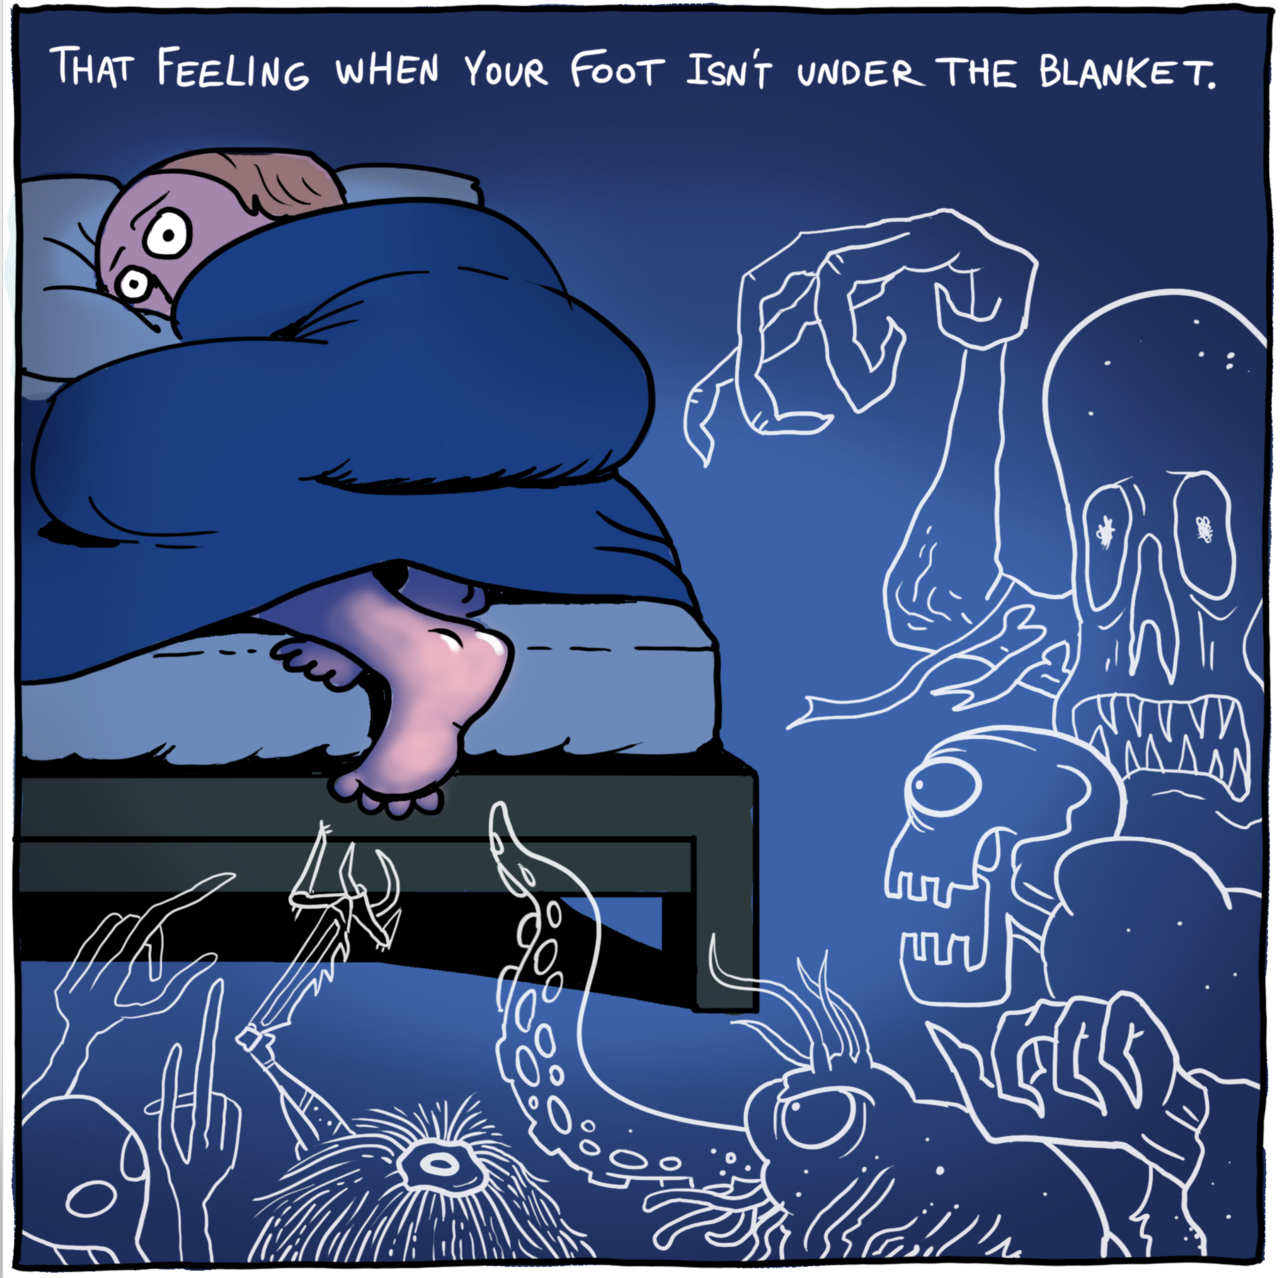 danmeth: “That feeling when your foot isn’t under the blanket. ”